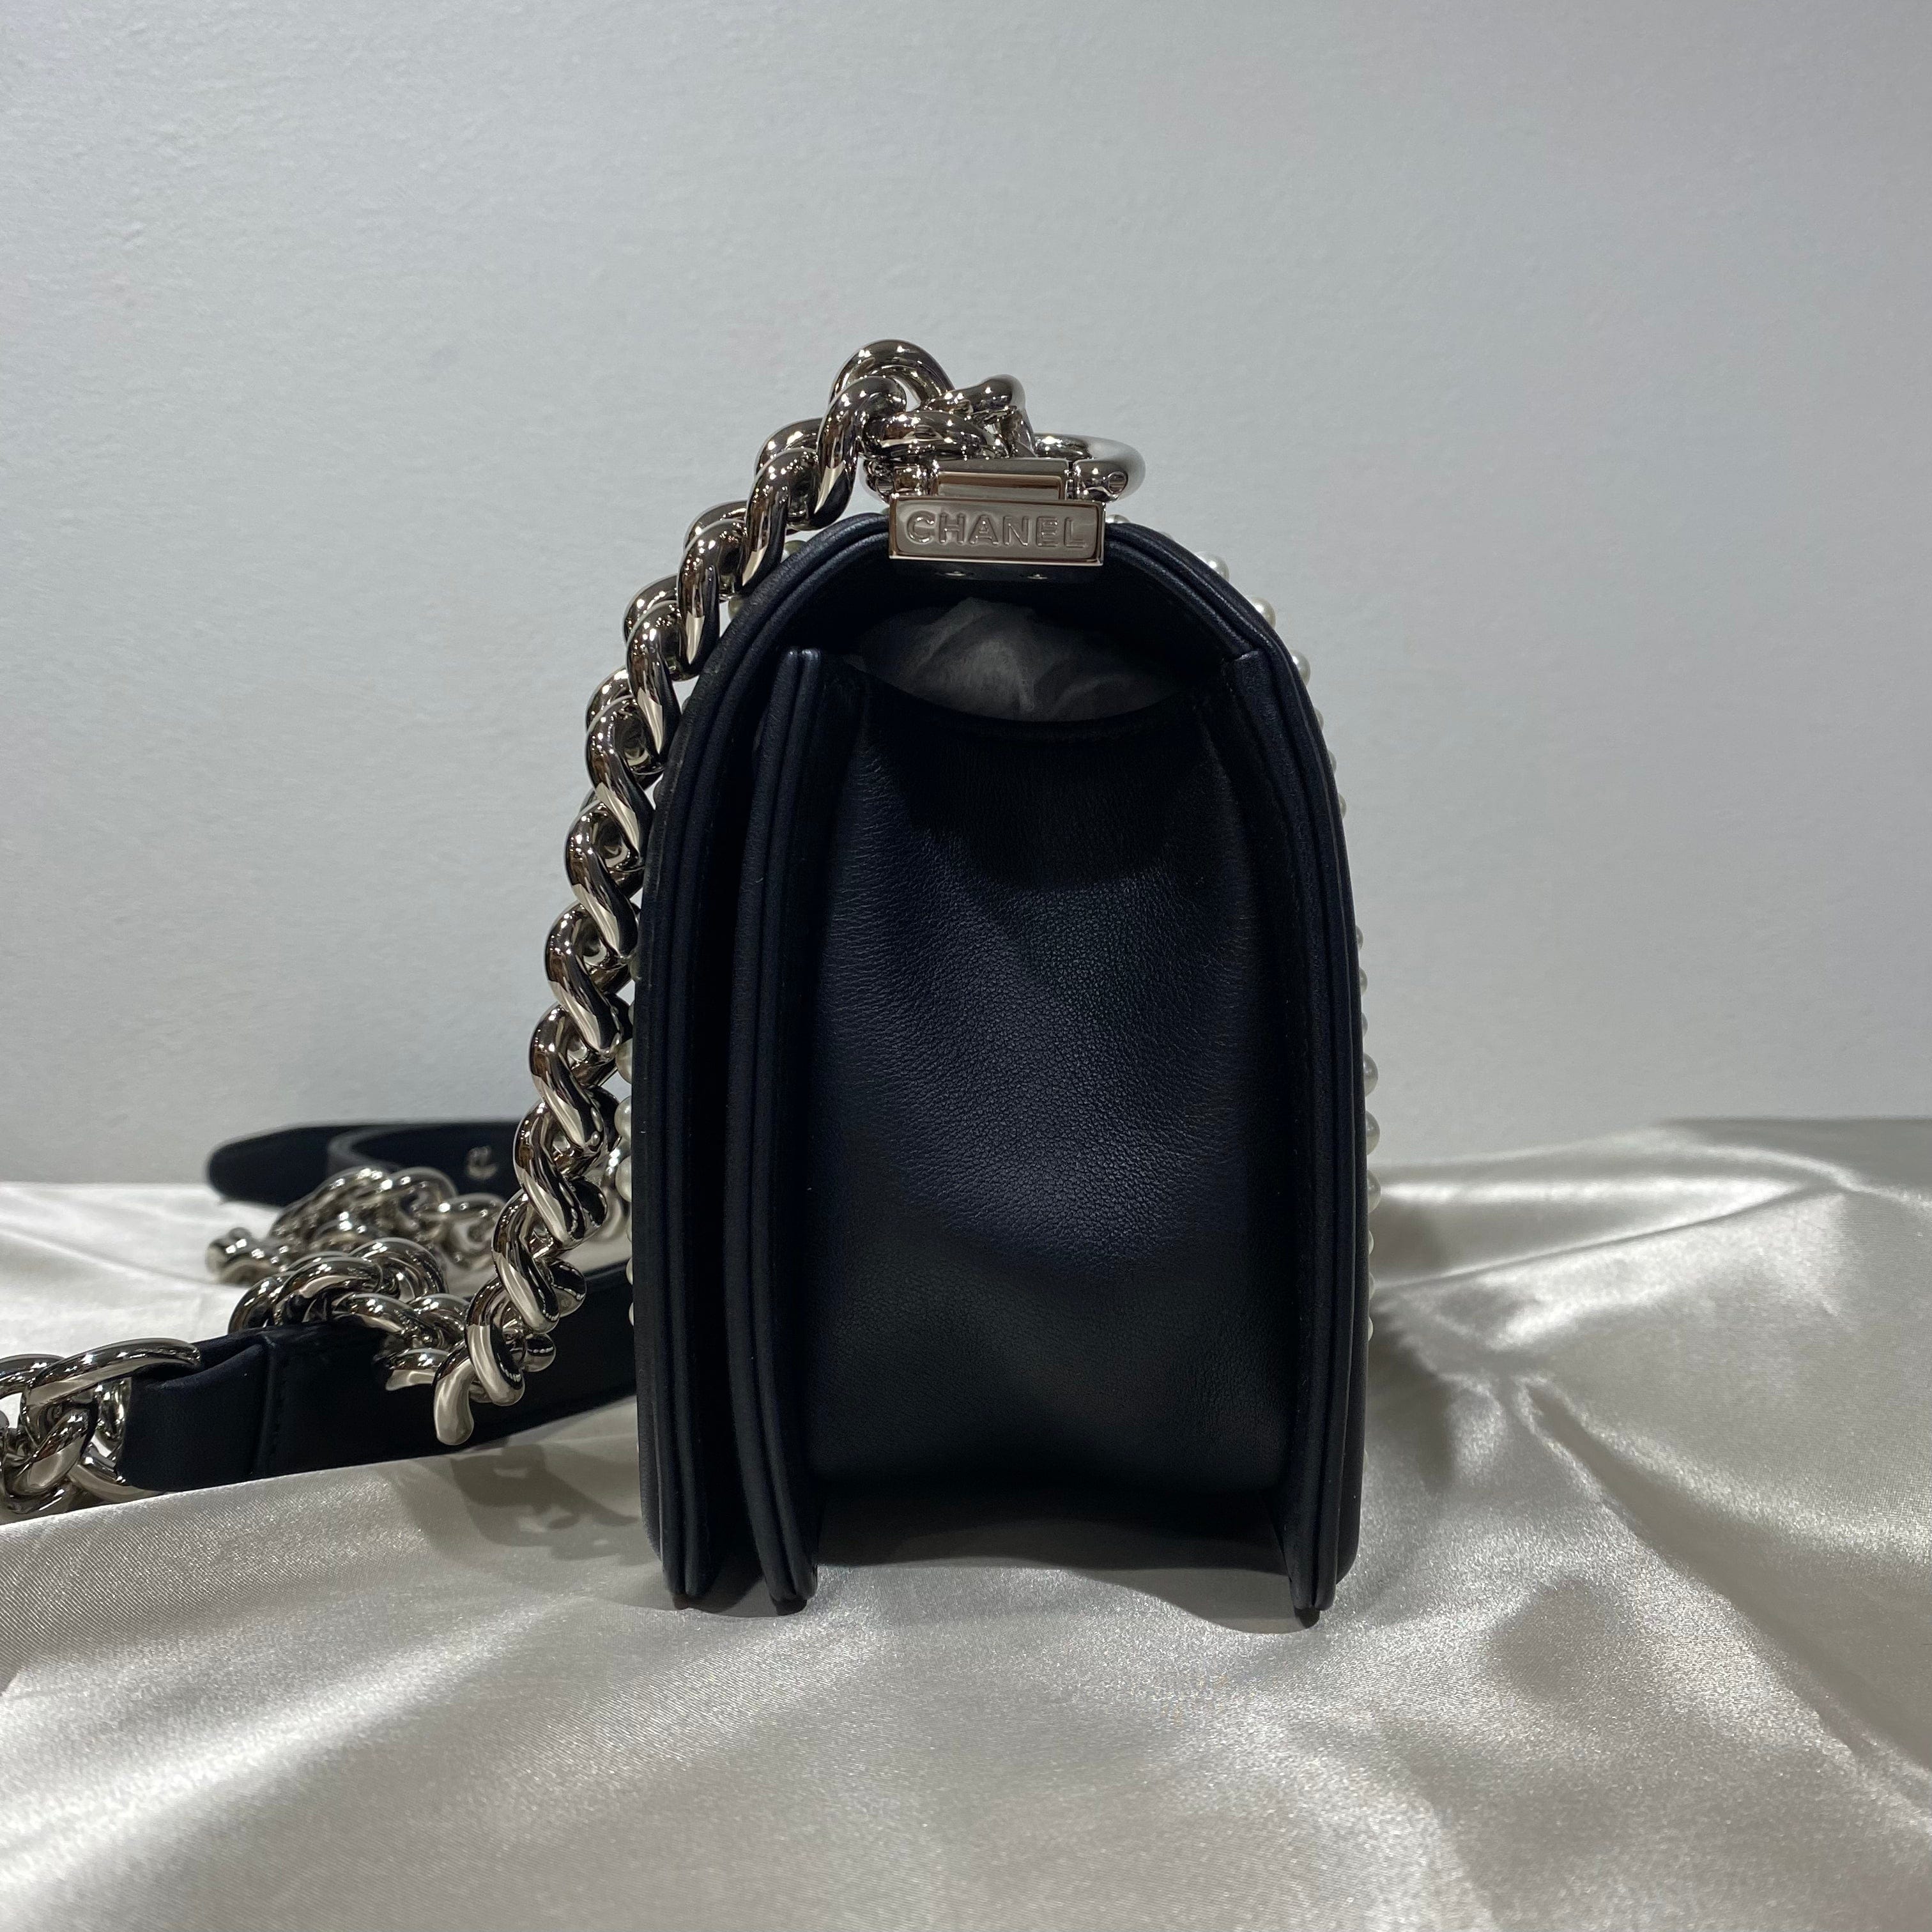 Chanel CHANEL PEARL BOYCHANEL SMALL CHAIN SHOULDER BAG BLACK LEATHER 90208965